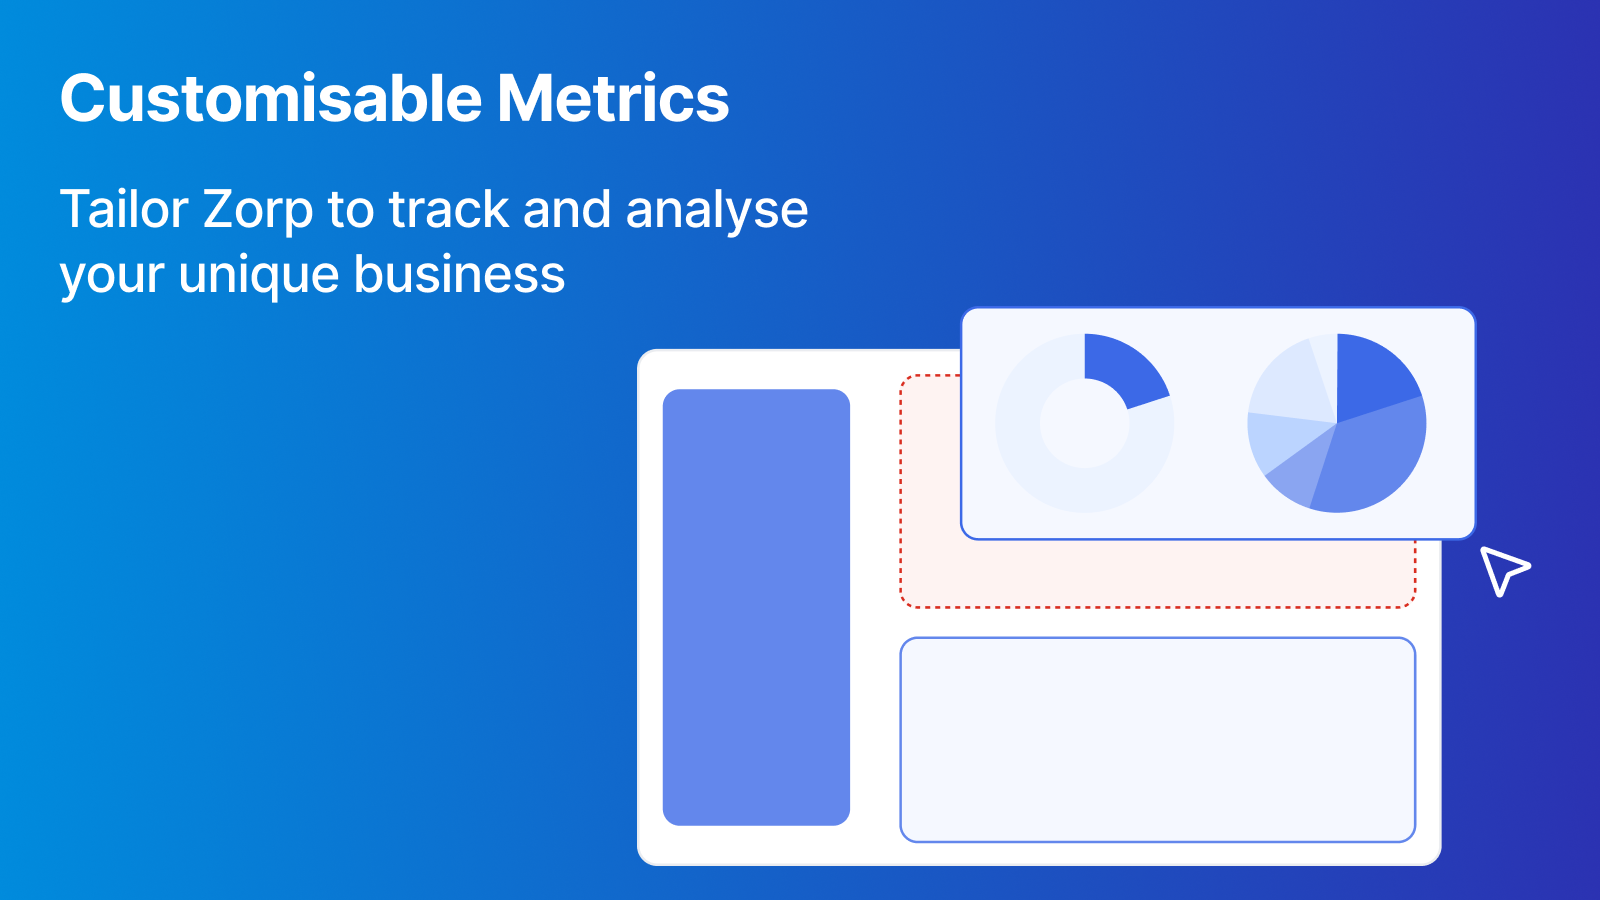 Customisable Metrics: Tailor Zorp to track and analyse metrics